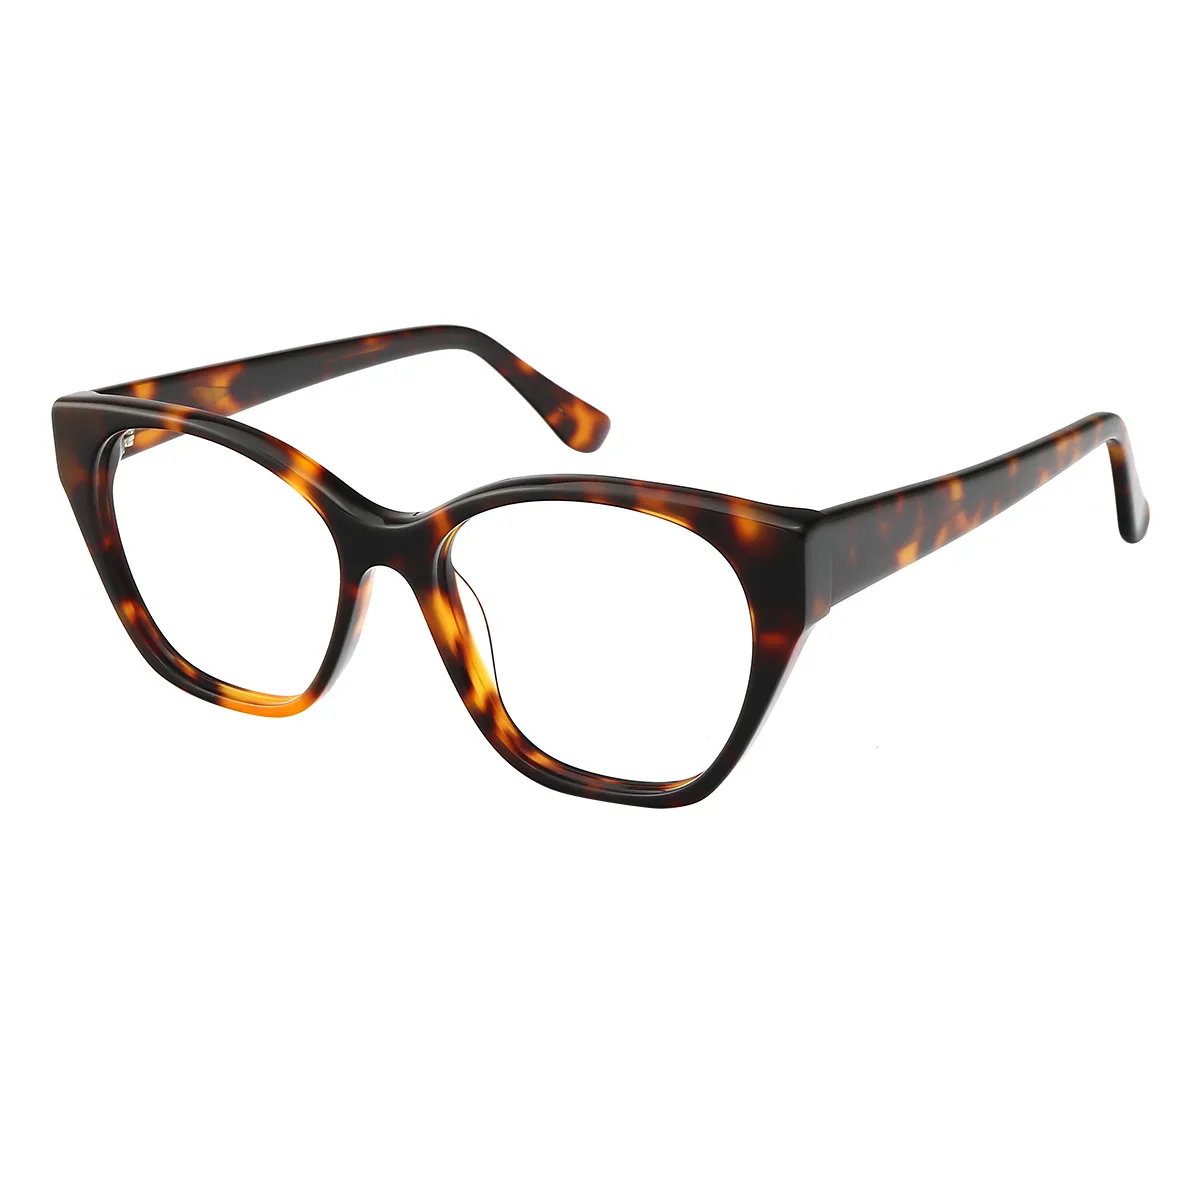 Surrey - Square Tortoiseshell Glasses for Women